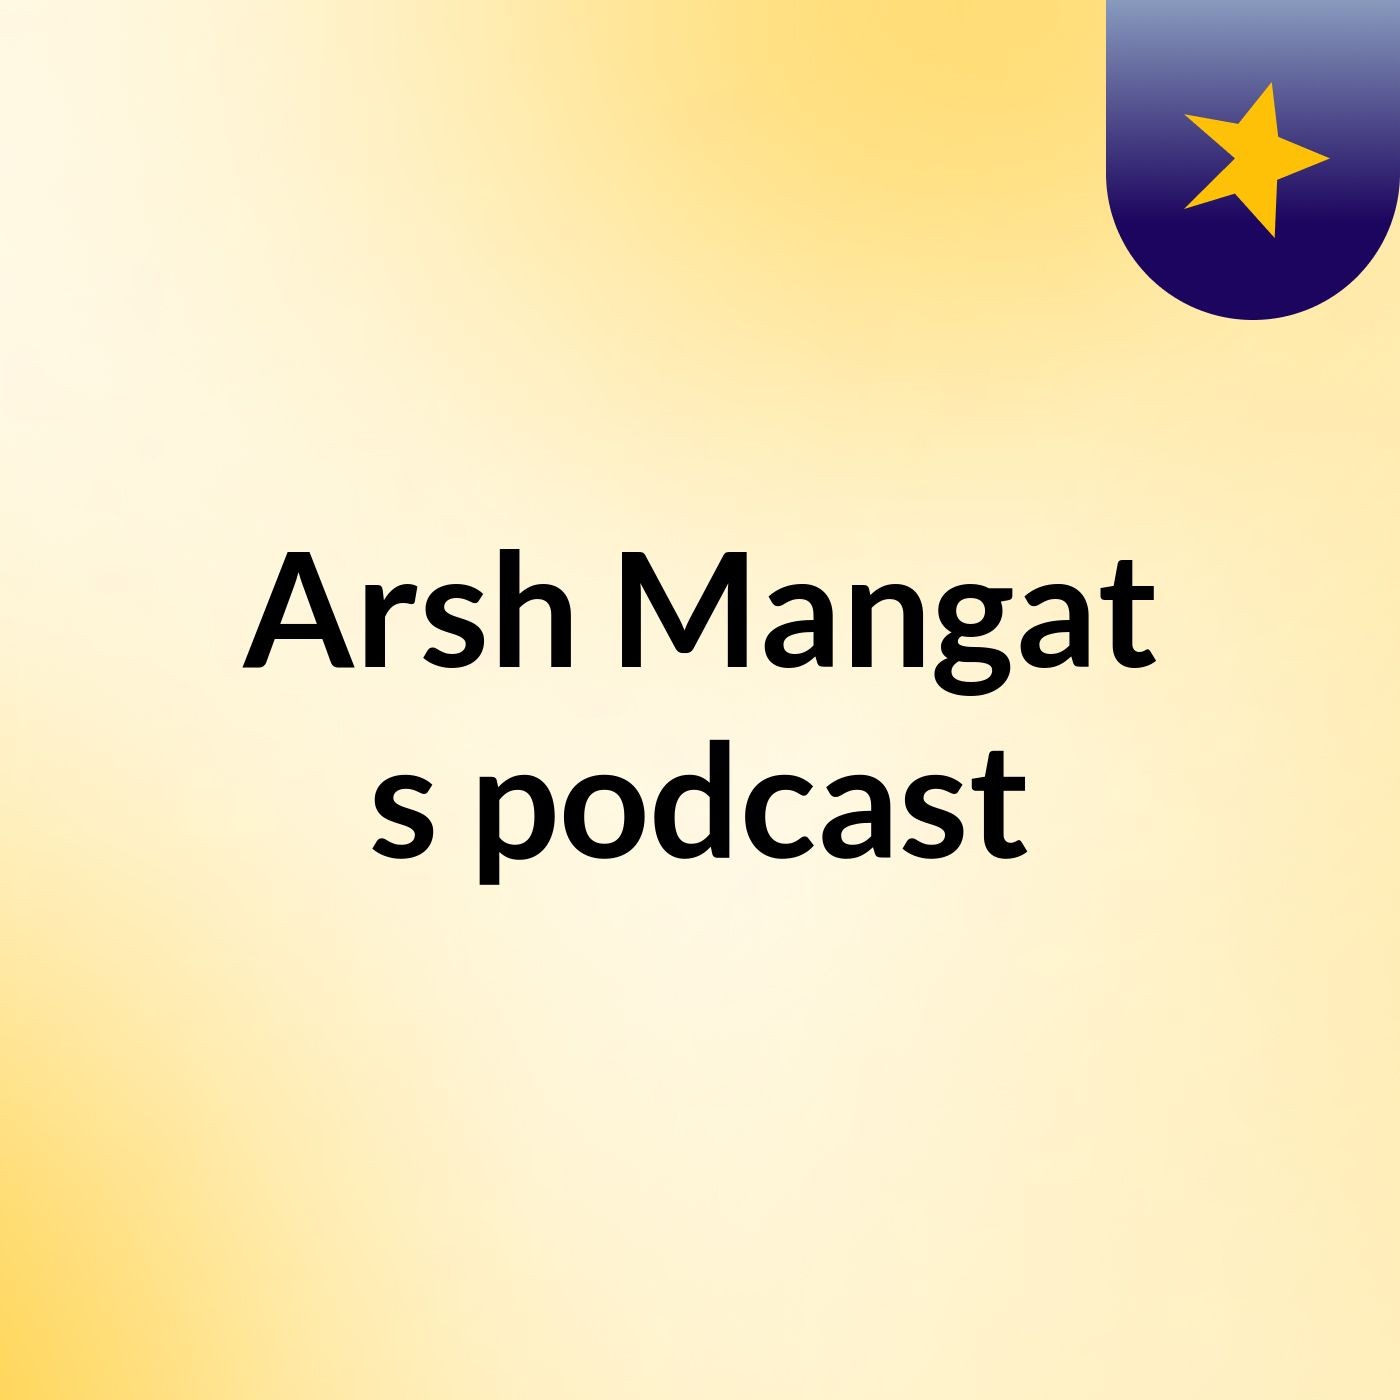 Arsh Mangat's podcast